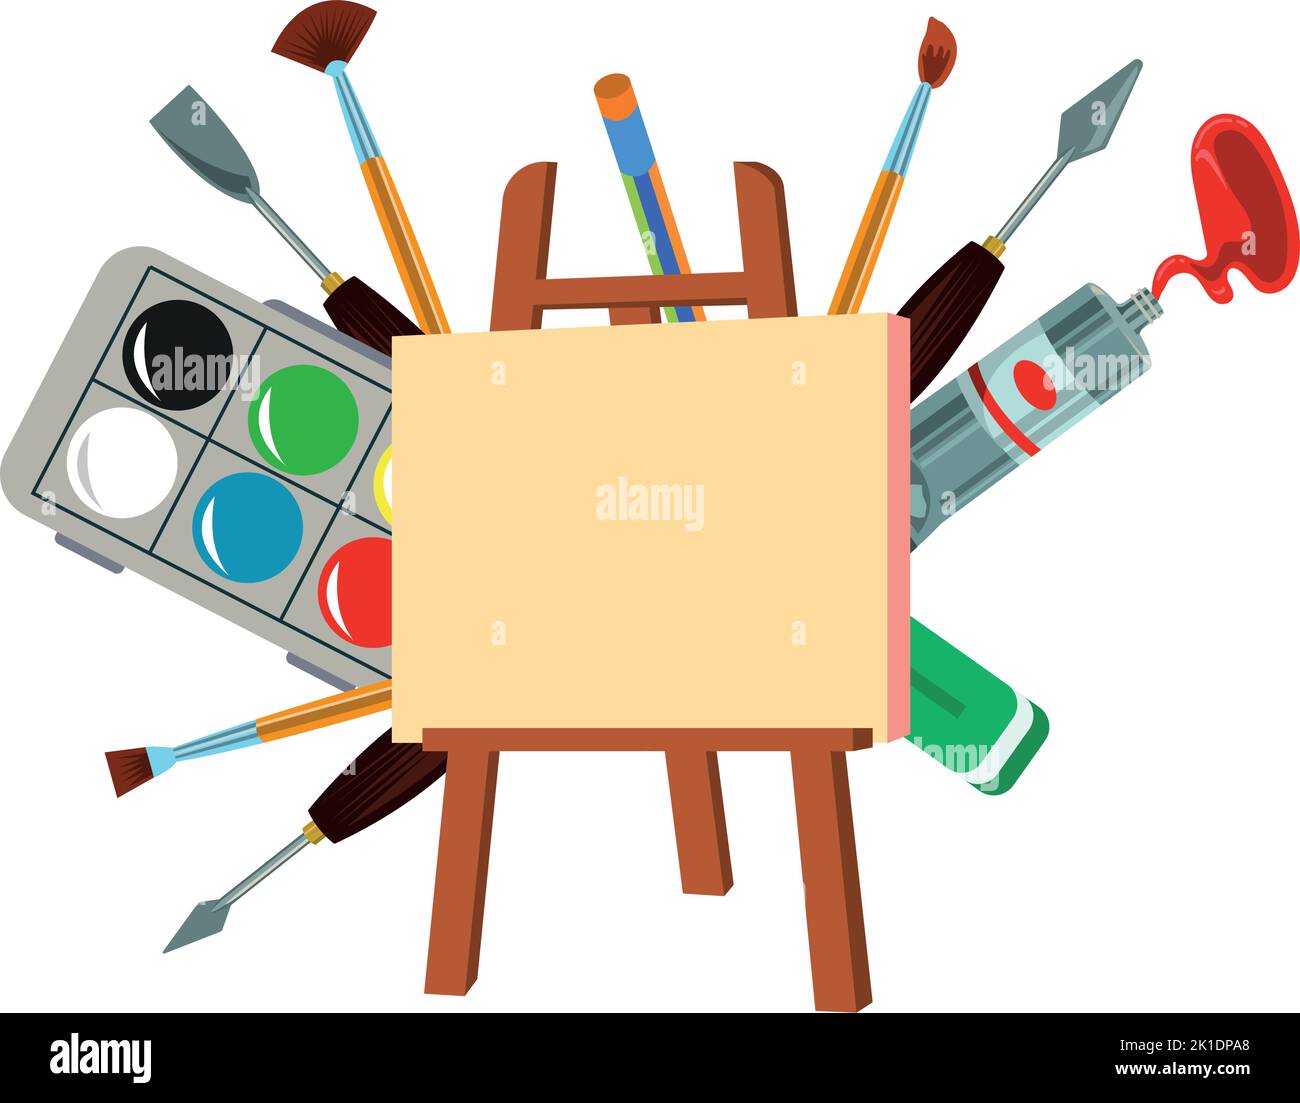 Art studio hand drawn art tools and supplies set. Palette paintbrush pensil oil paint watercolor Stock Vector